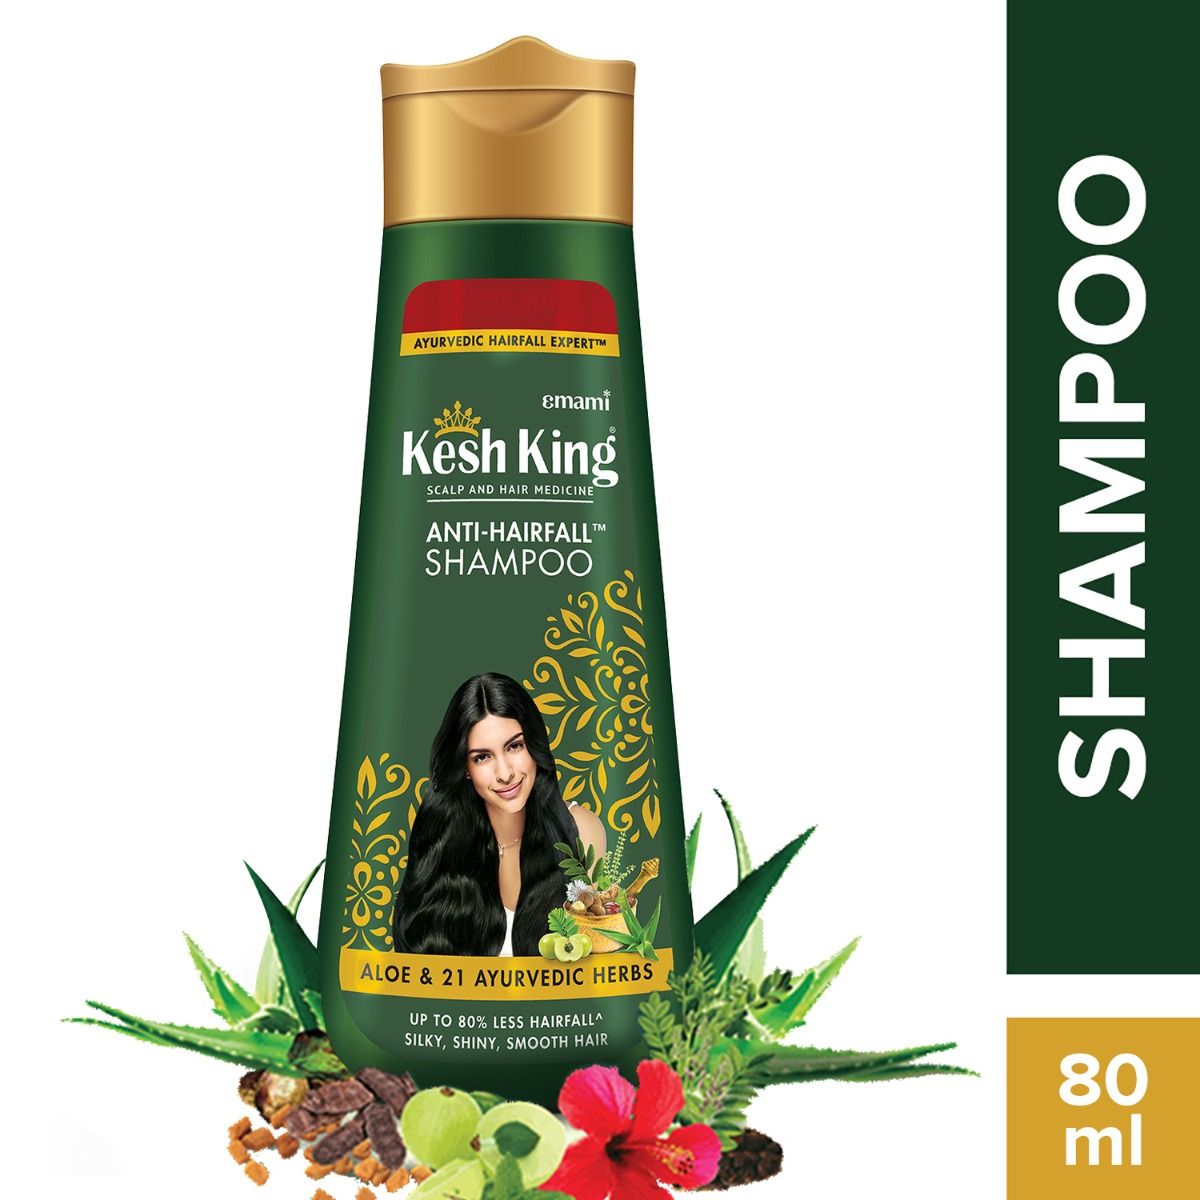 Buy Kesh King Anti-Hairfall Shampoo, 80 ml Online